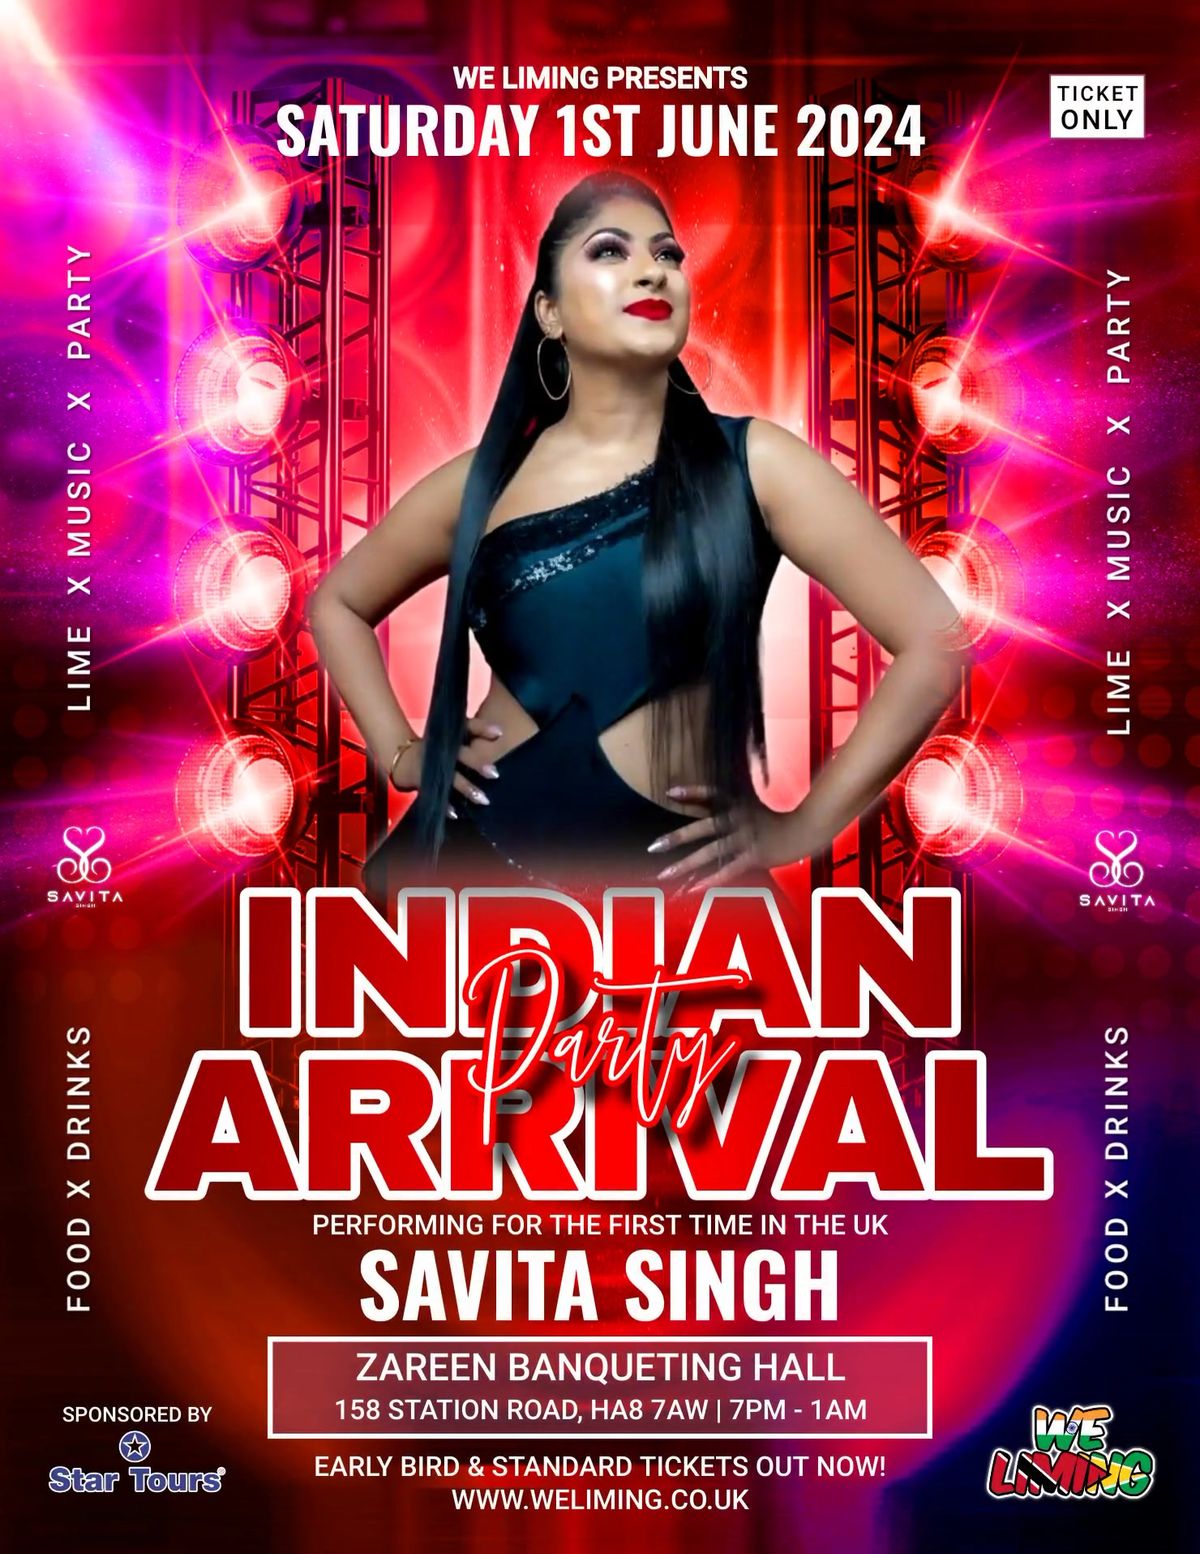 Indian Arrival Party - Savita Singh